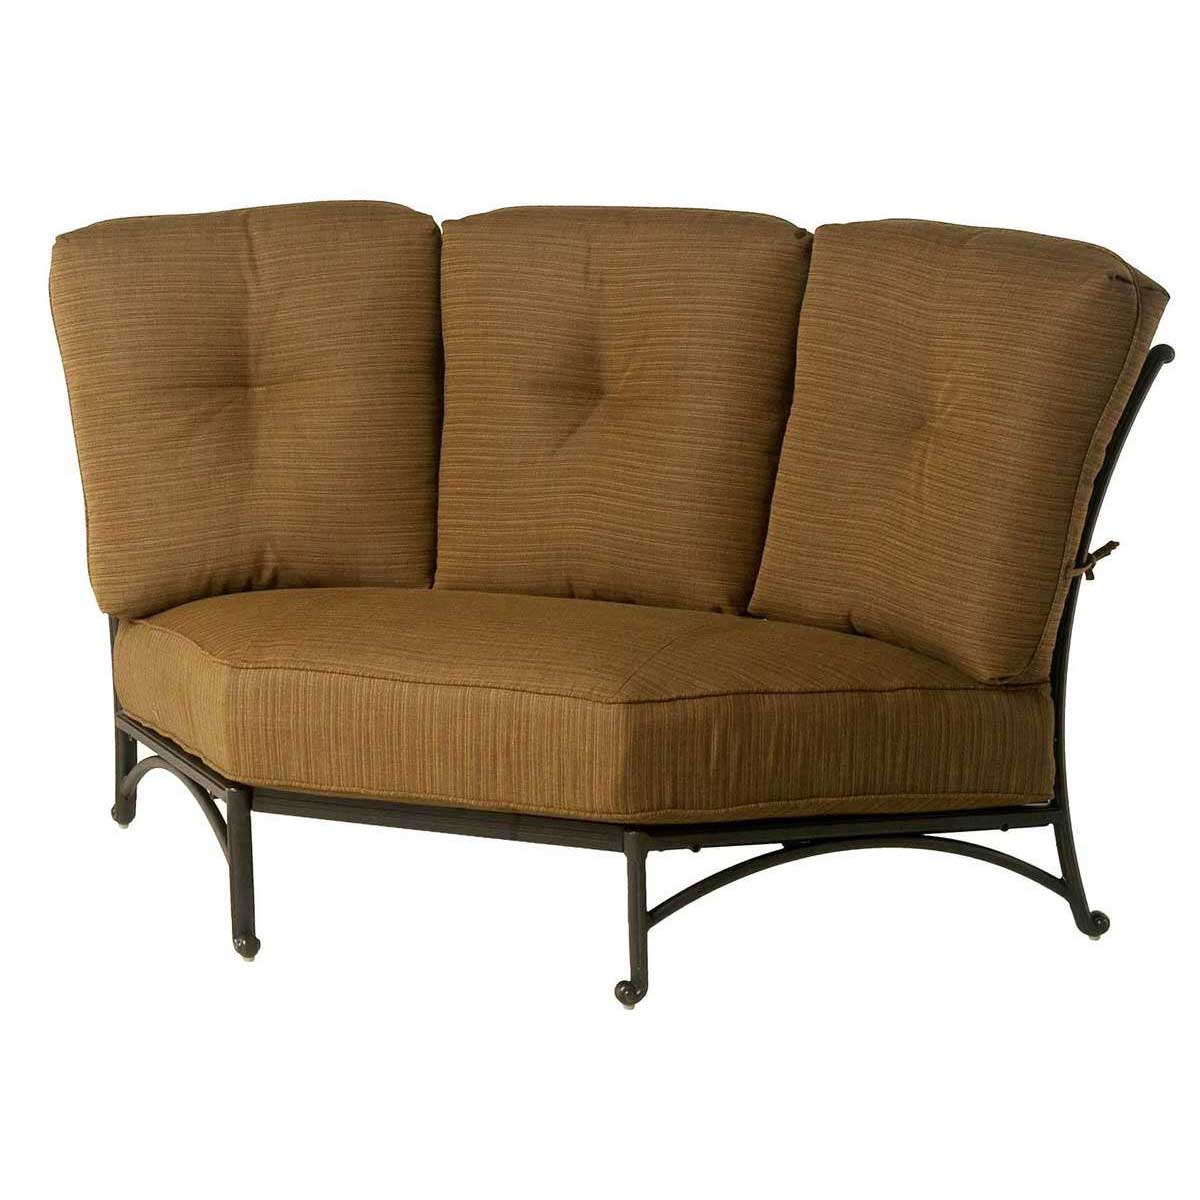 Hanamint Mayfair Estate Club Corner Chair Outdoor Chairs 12026017